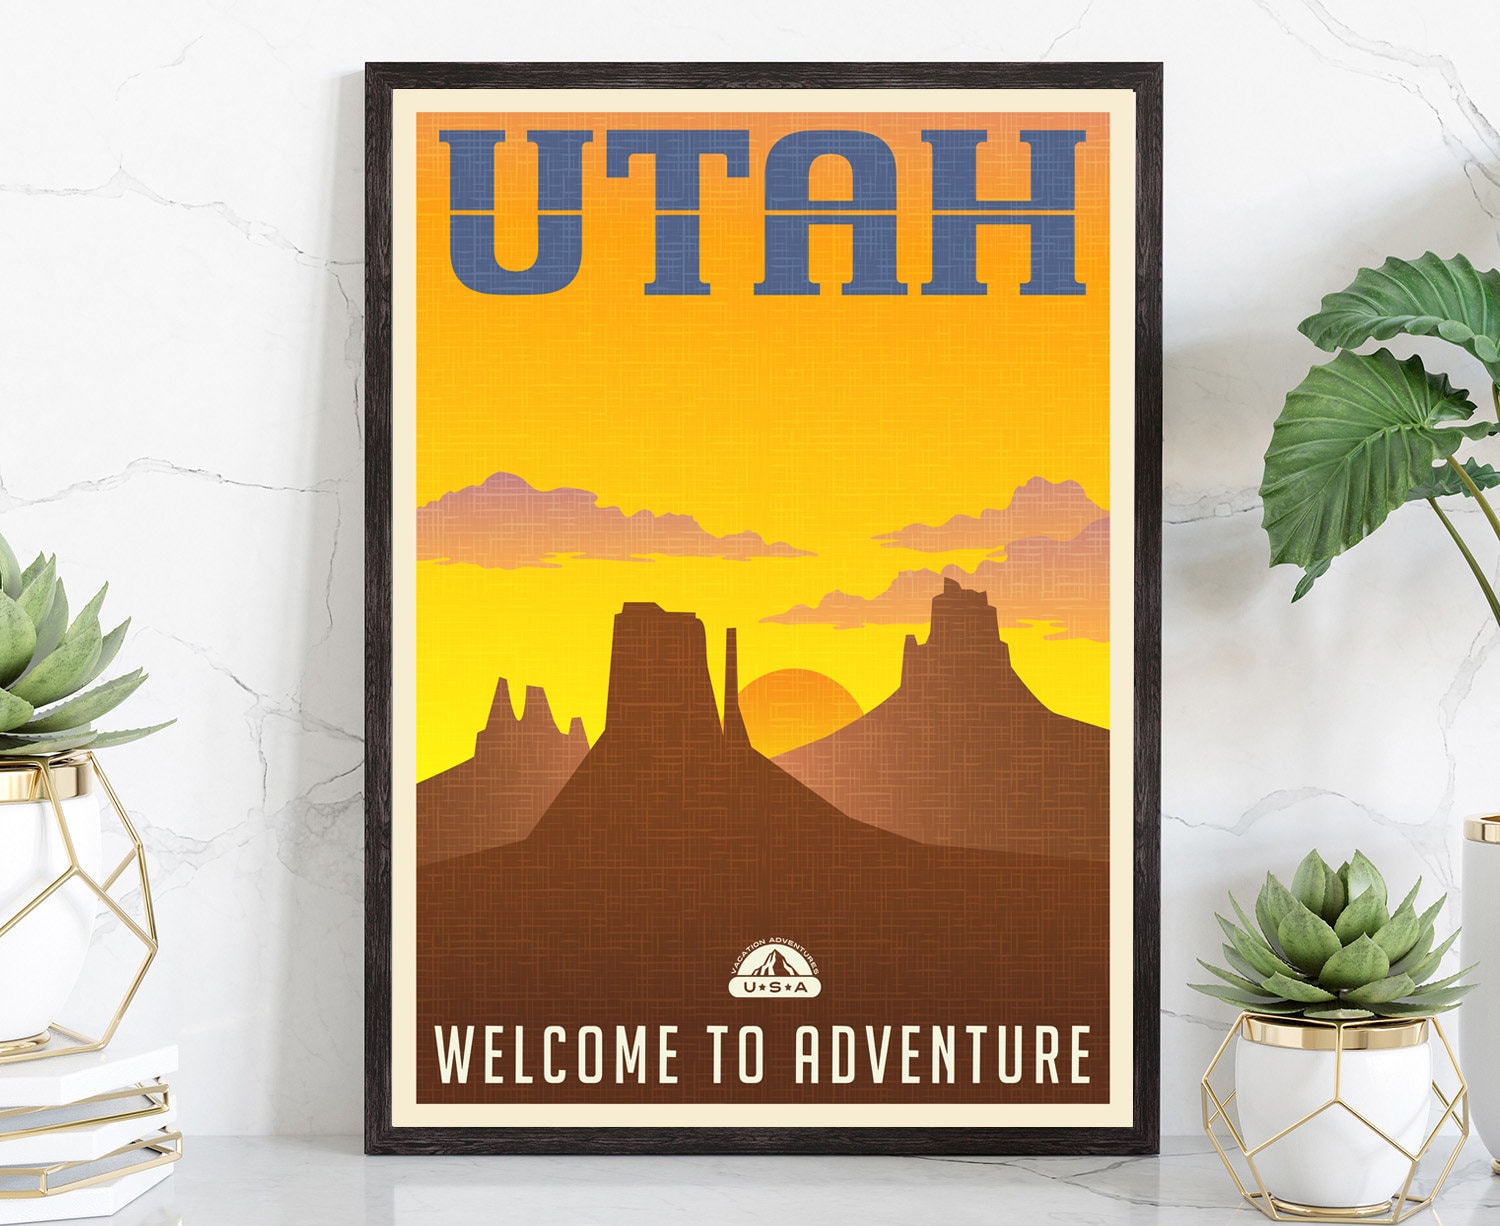 Utah Vintage Rustic Poster Print, Retro Style Travel Poster